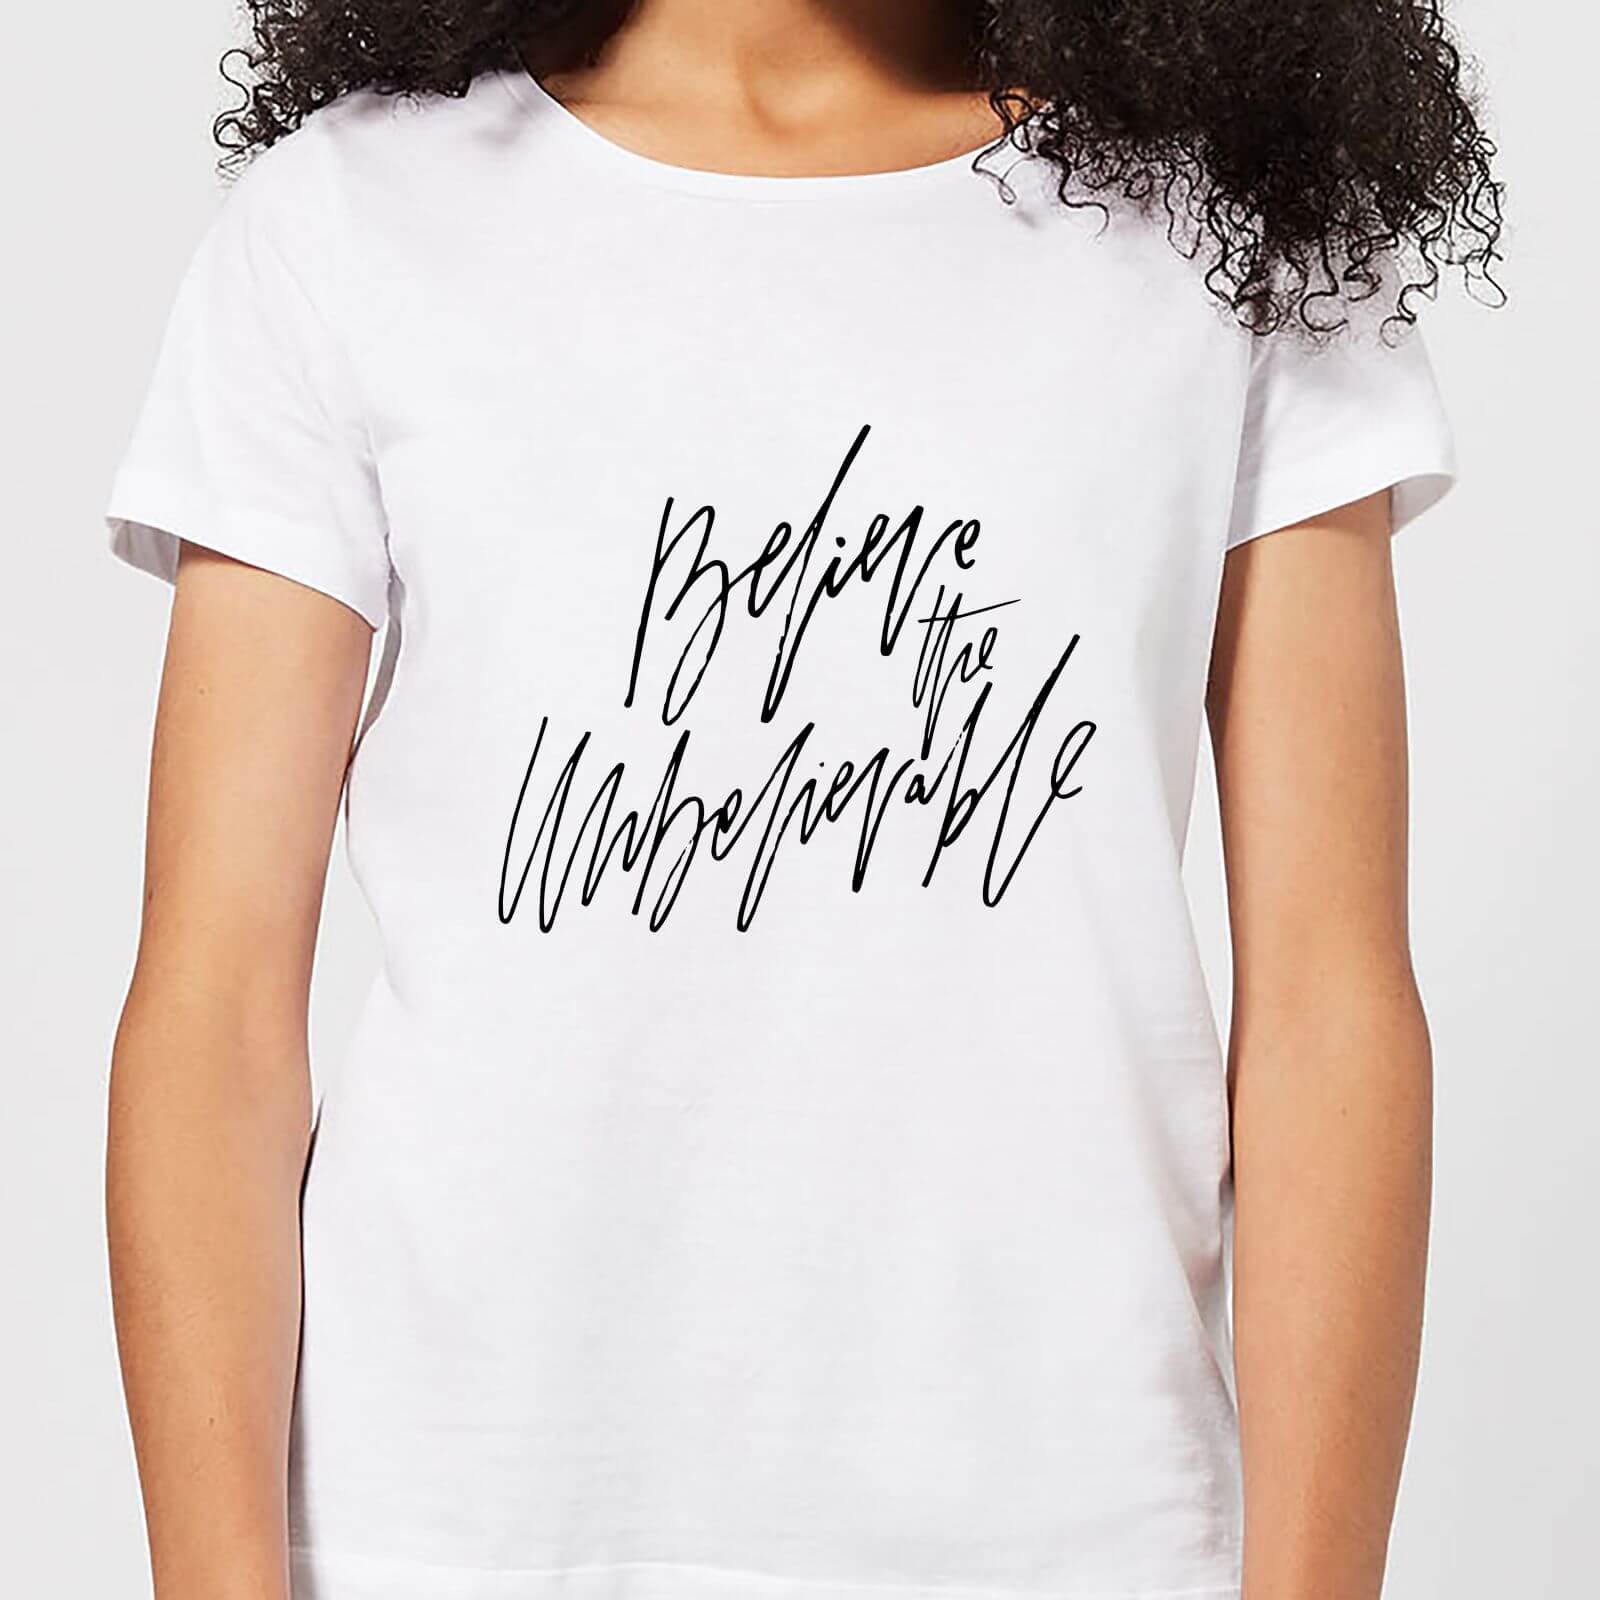 Believe The Unbelievable Women's T-Shirt - White - S - White